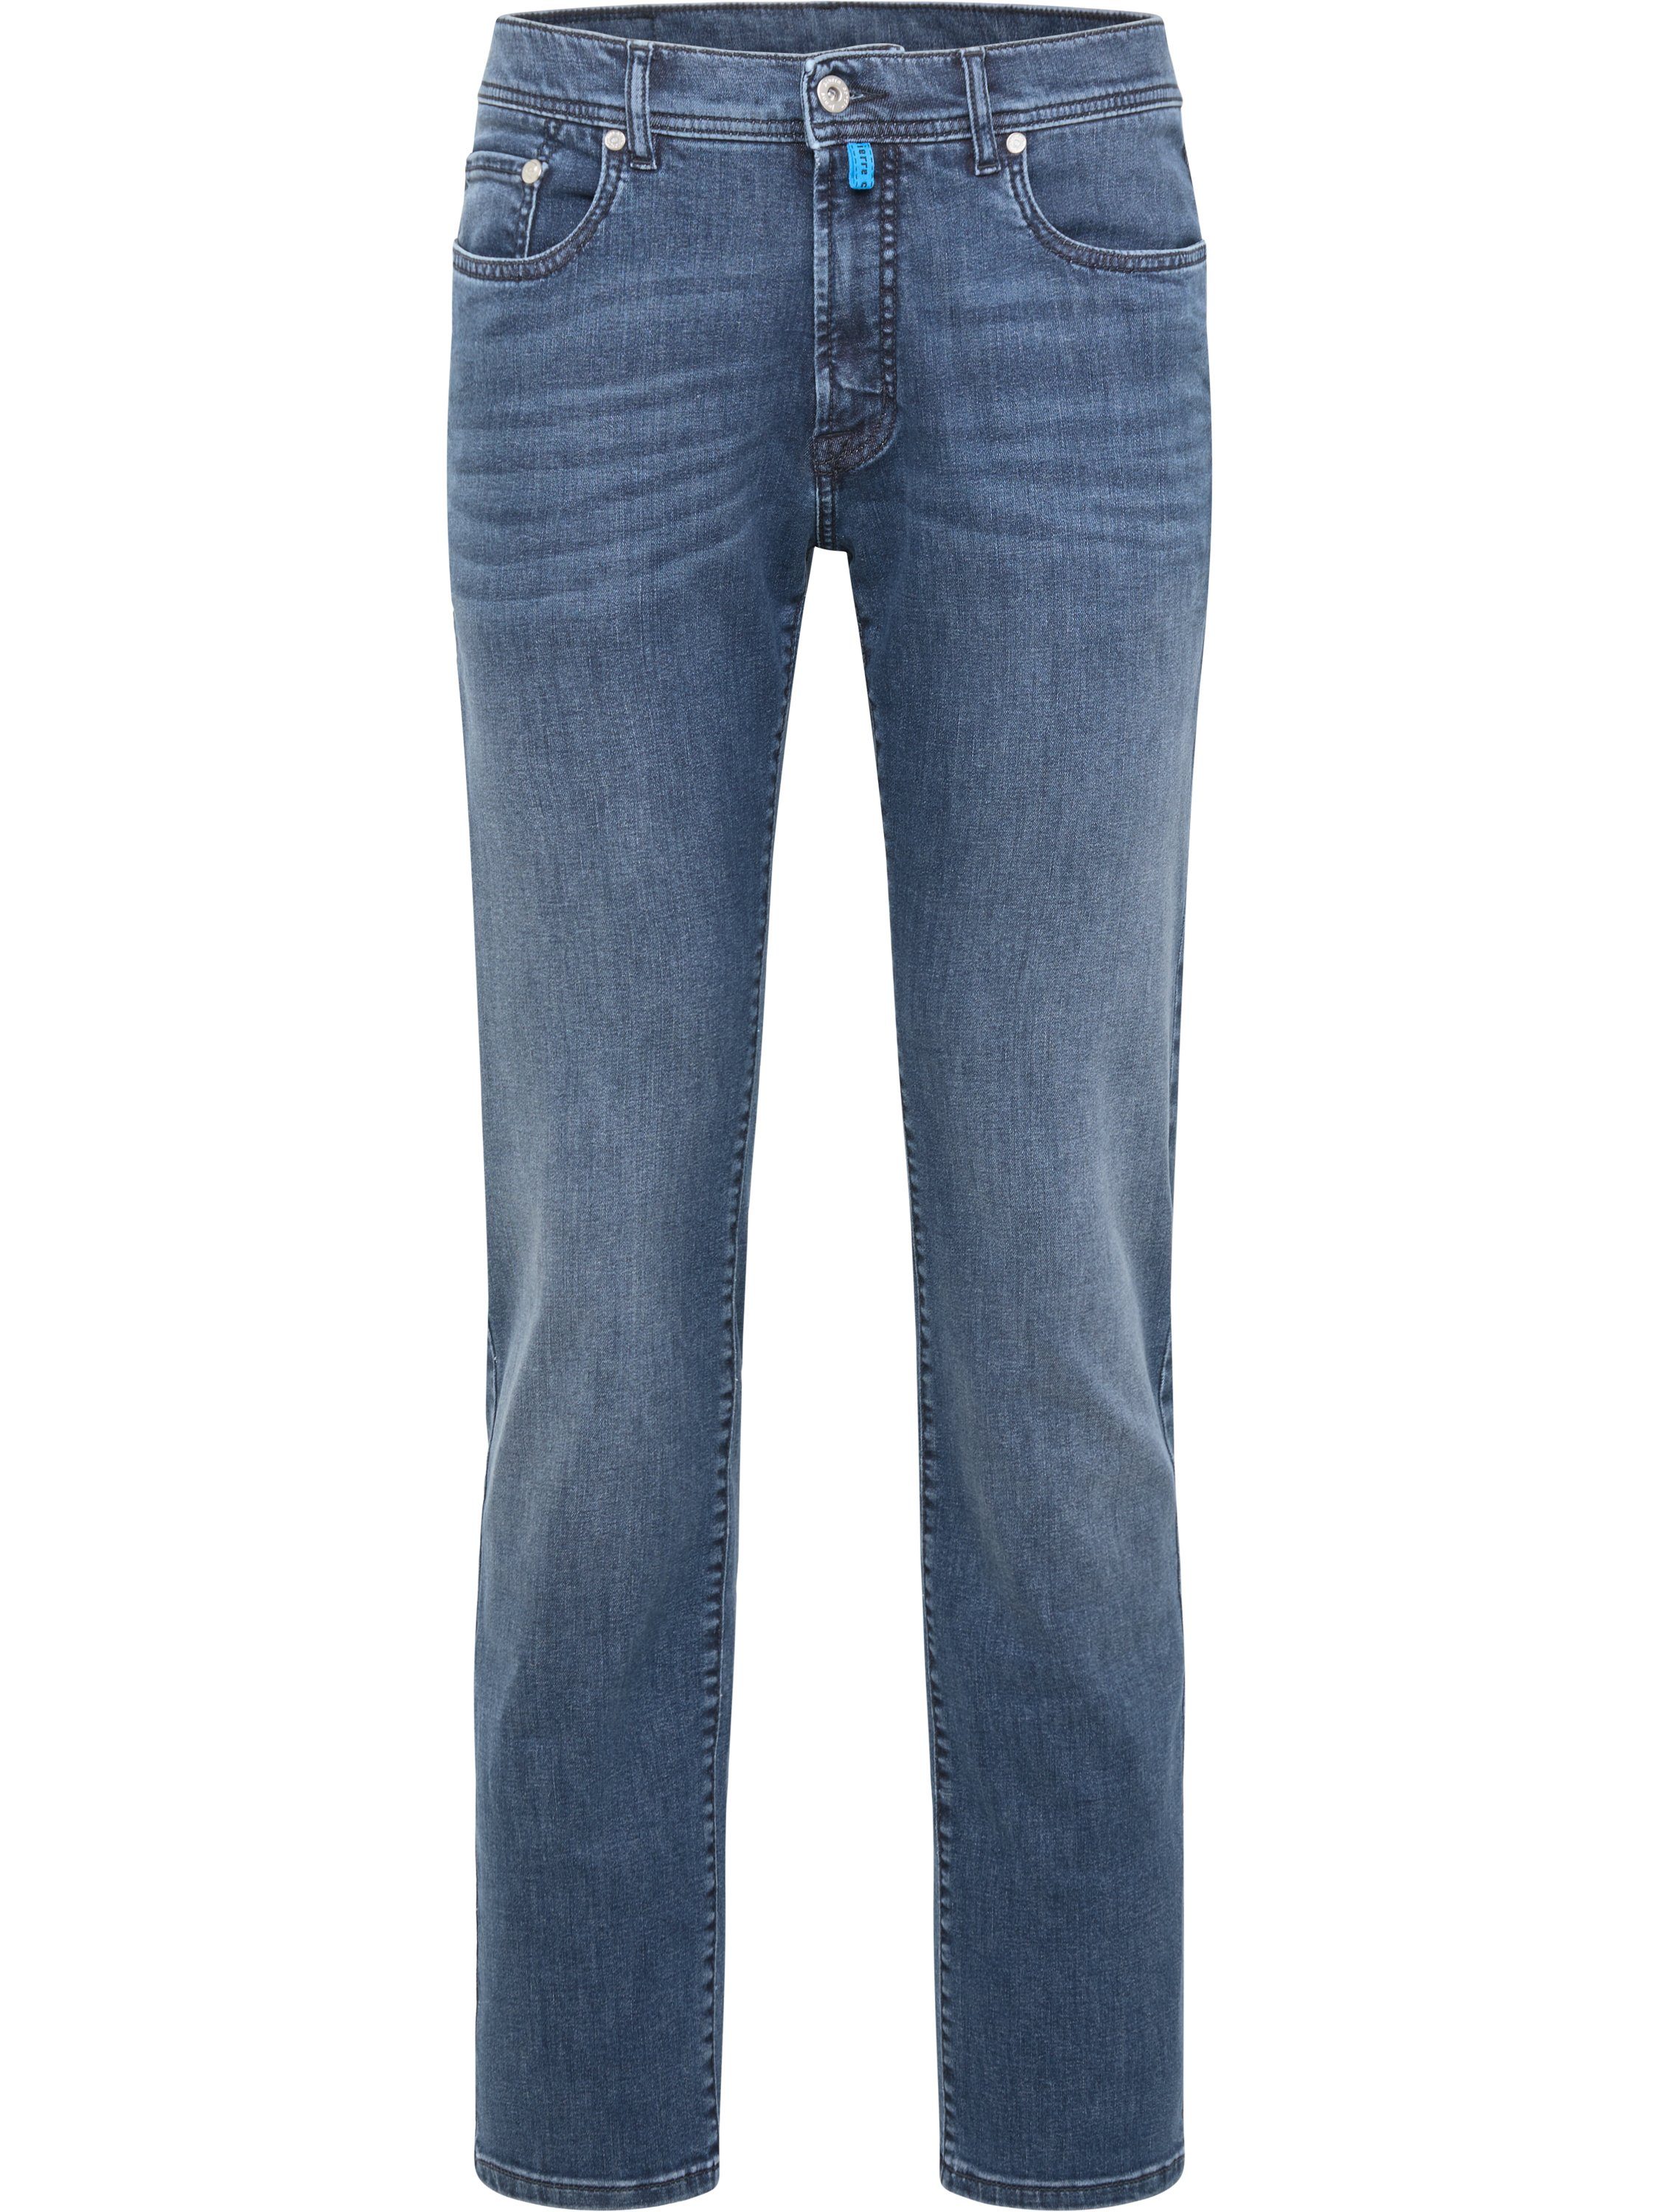 Pierre Cardin 5-Pocket-Jeans PIERRE CARDIN LYON soft blue 38915 7713.01 - Konfektionsgröße/Übergröß